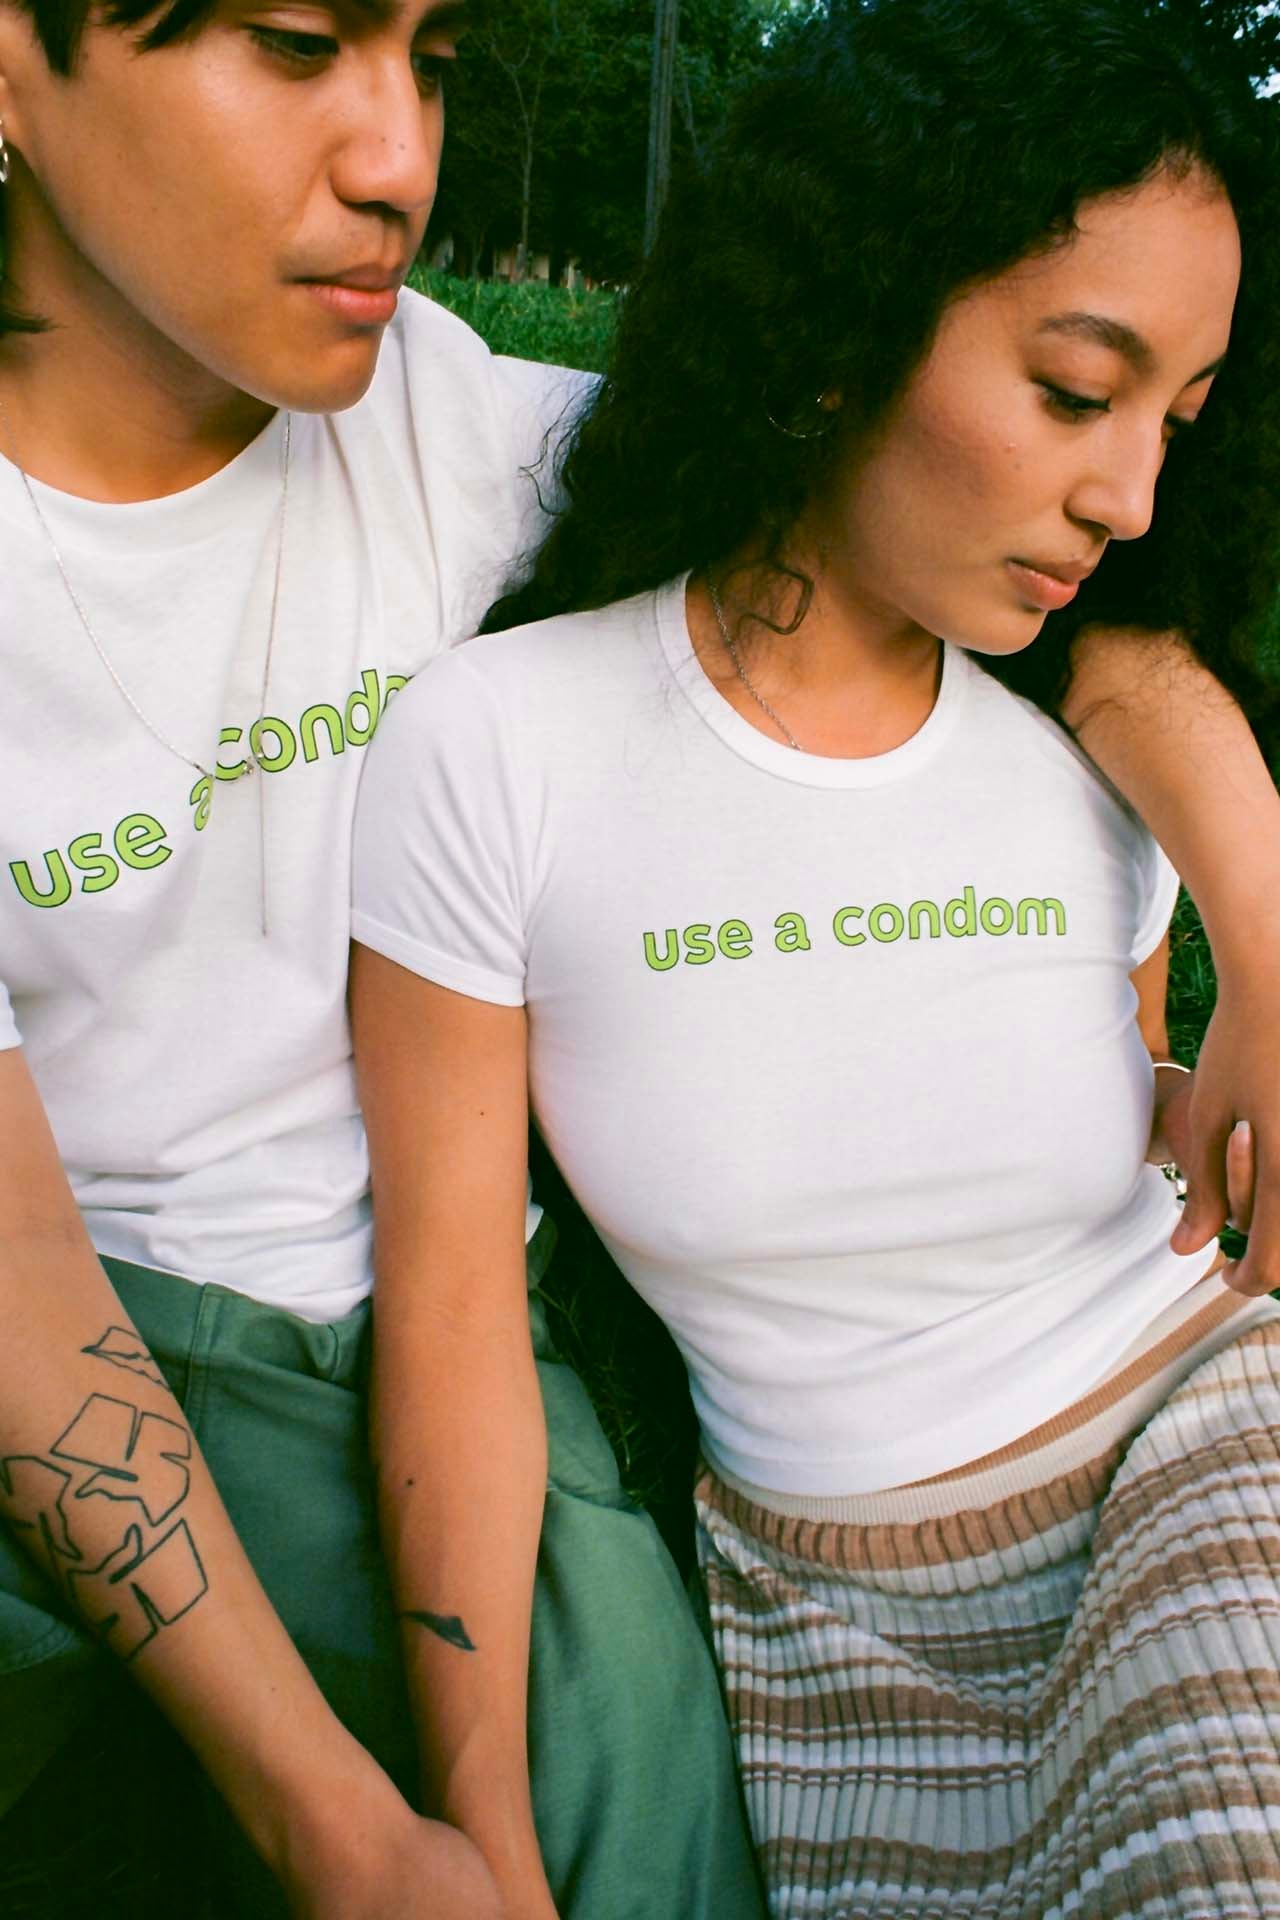 sexual wellness sti epidemic Jems use a condom campaign